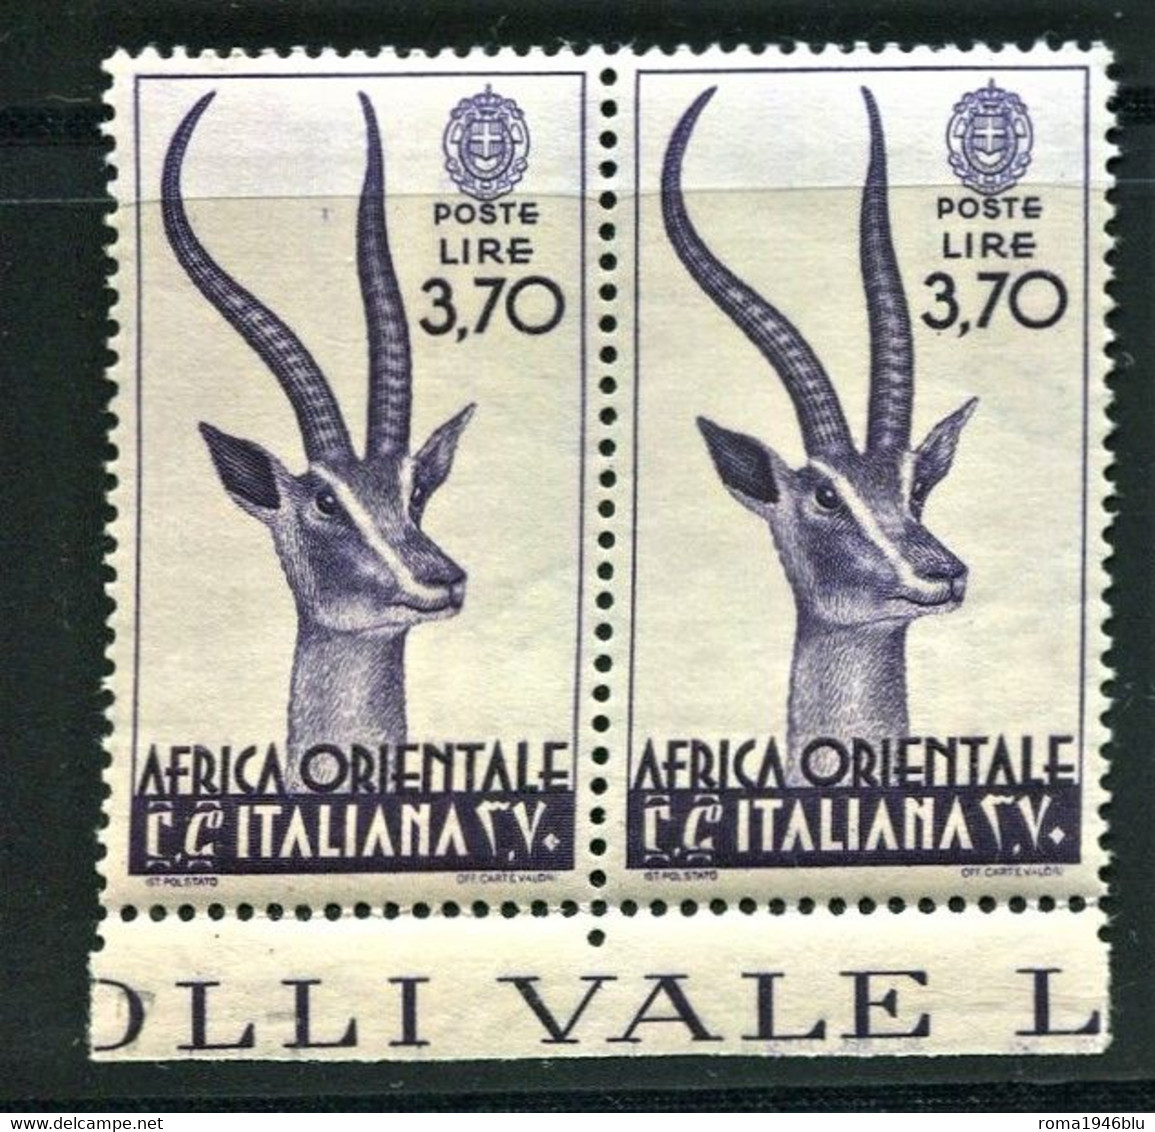 AFRICA ORIENTALE ITALIANA 1938 SOGGETTI VARI P.O. 3,70 COPPIA  ** MNH - Italian Eastern Africa